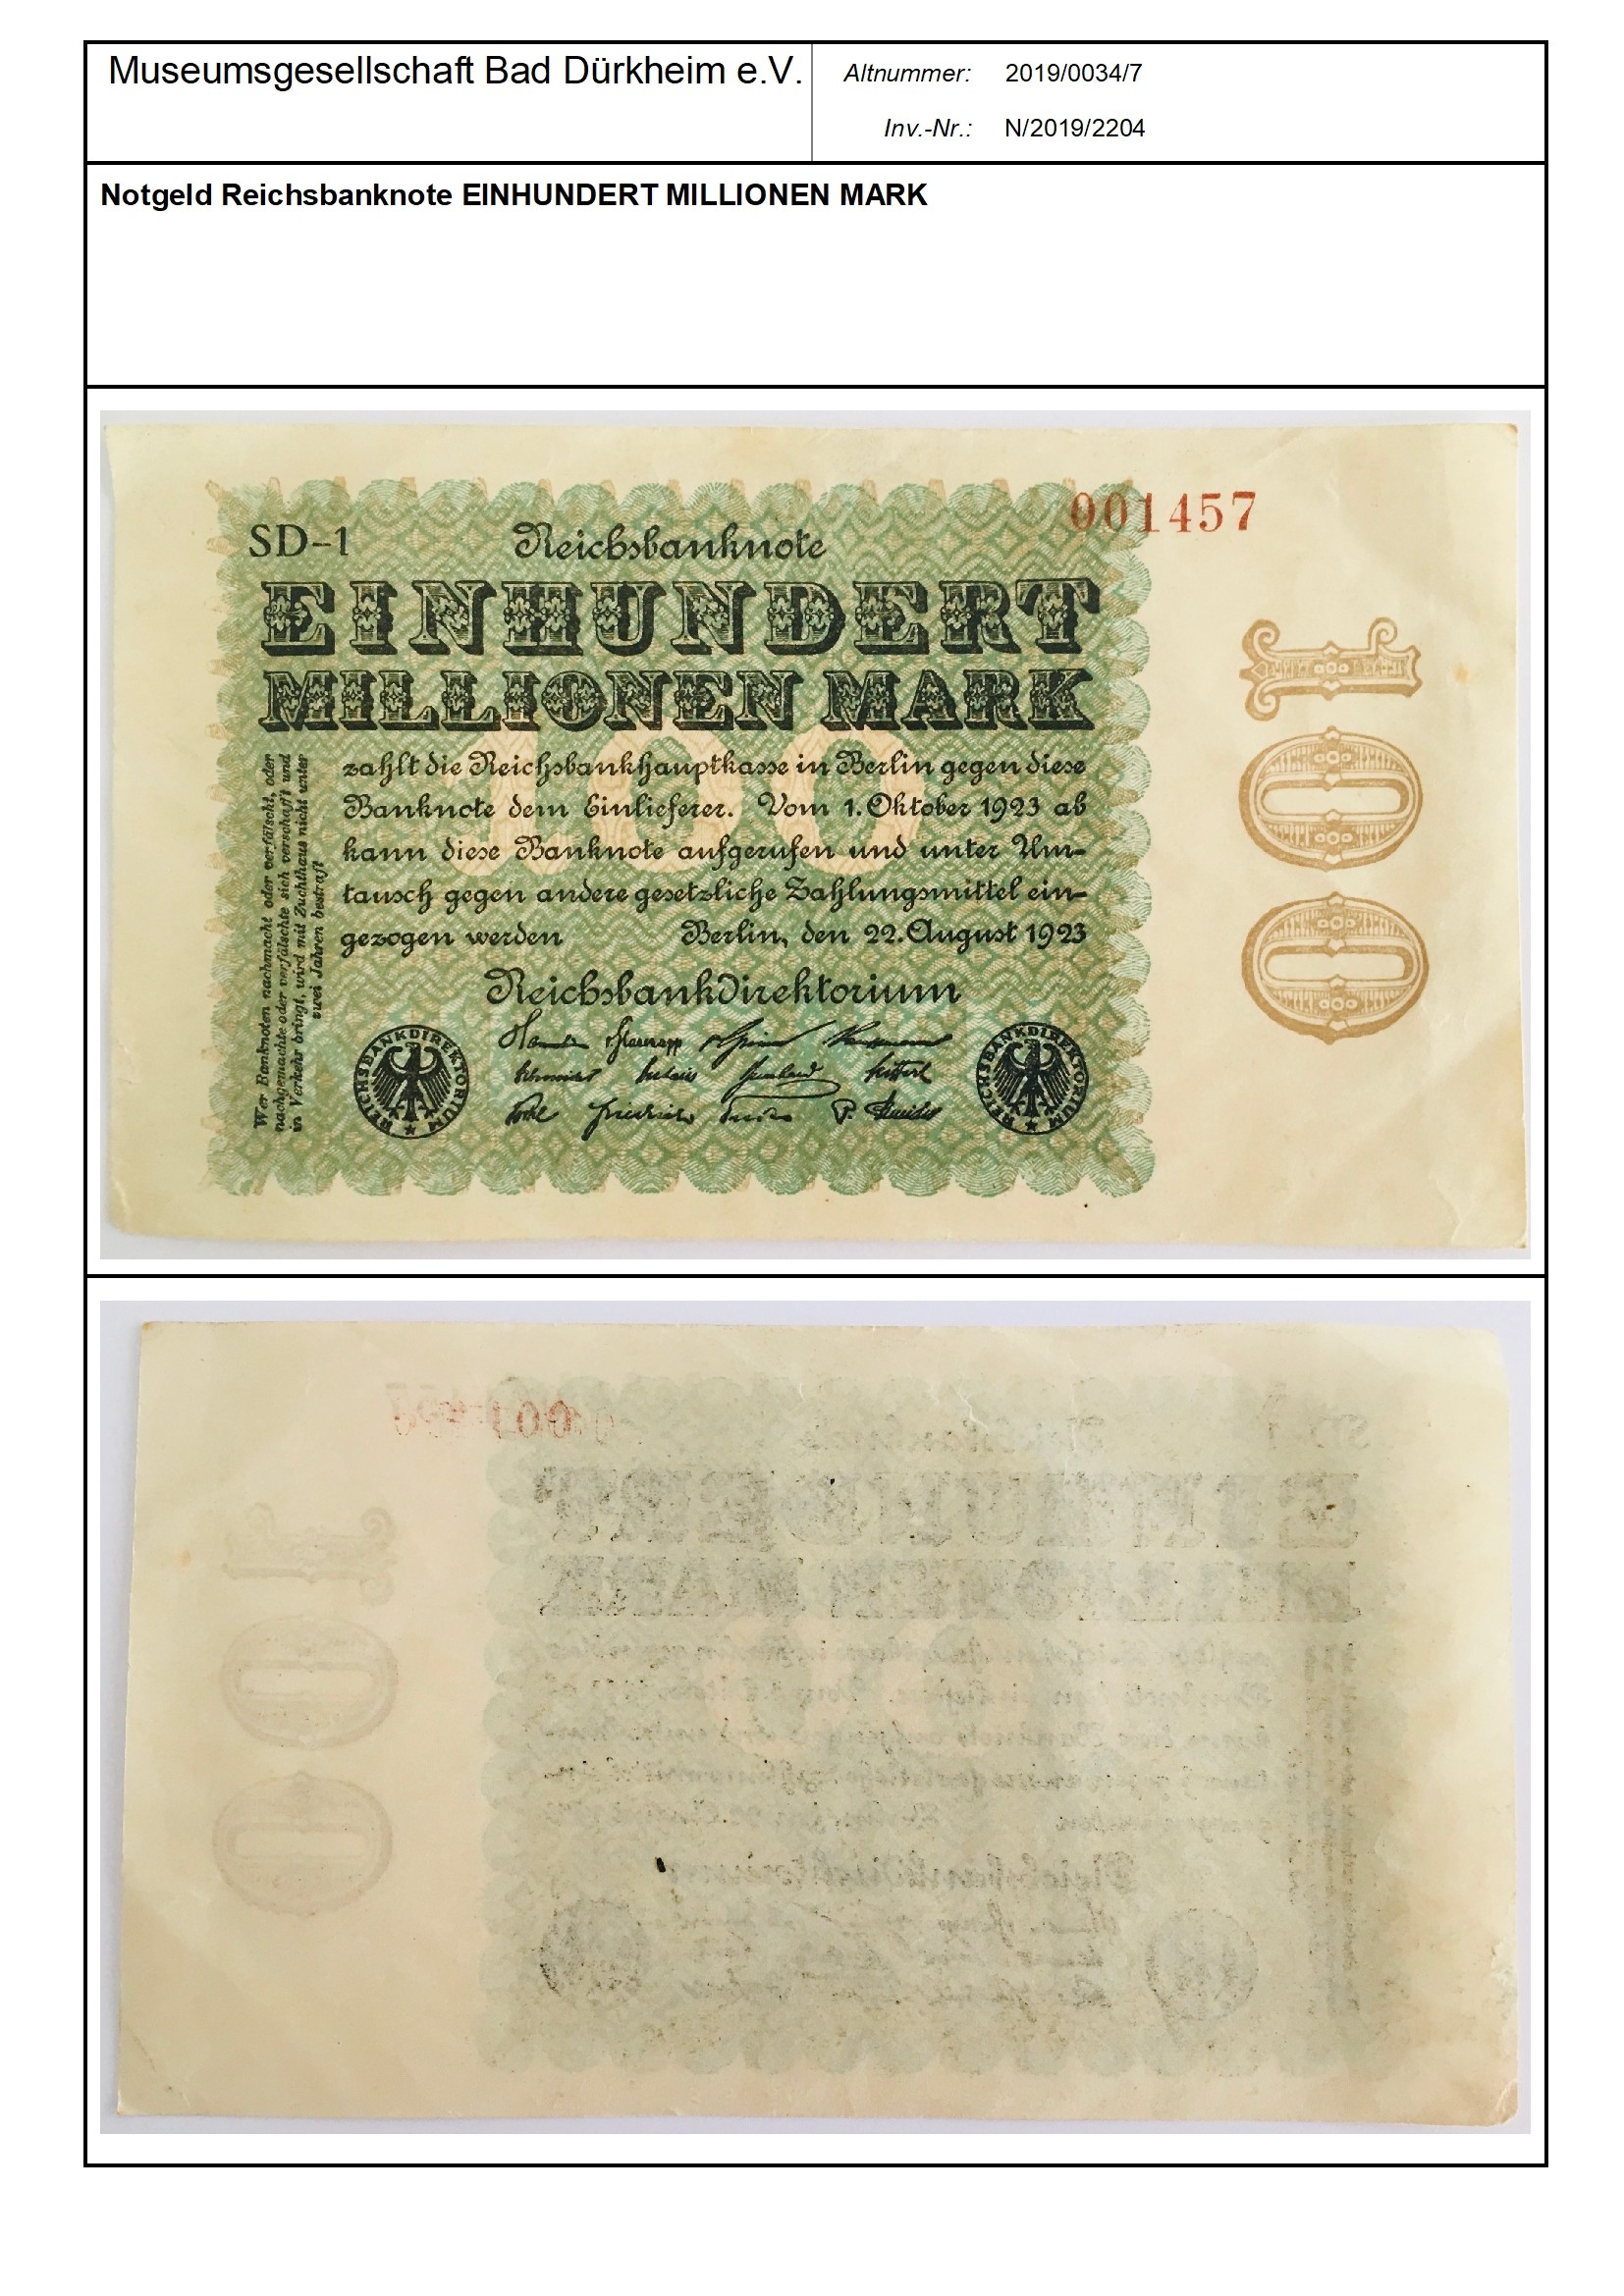 Notgeld Reichsbanknote EINHUNDERT MILLIONEN MARK
Serien-Nummer: 001457 (Museumsgesellschaft Bad Dürkheim e.V. CC BY-NC-SA)